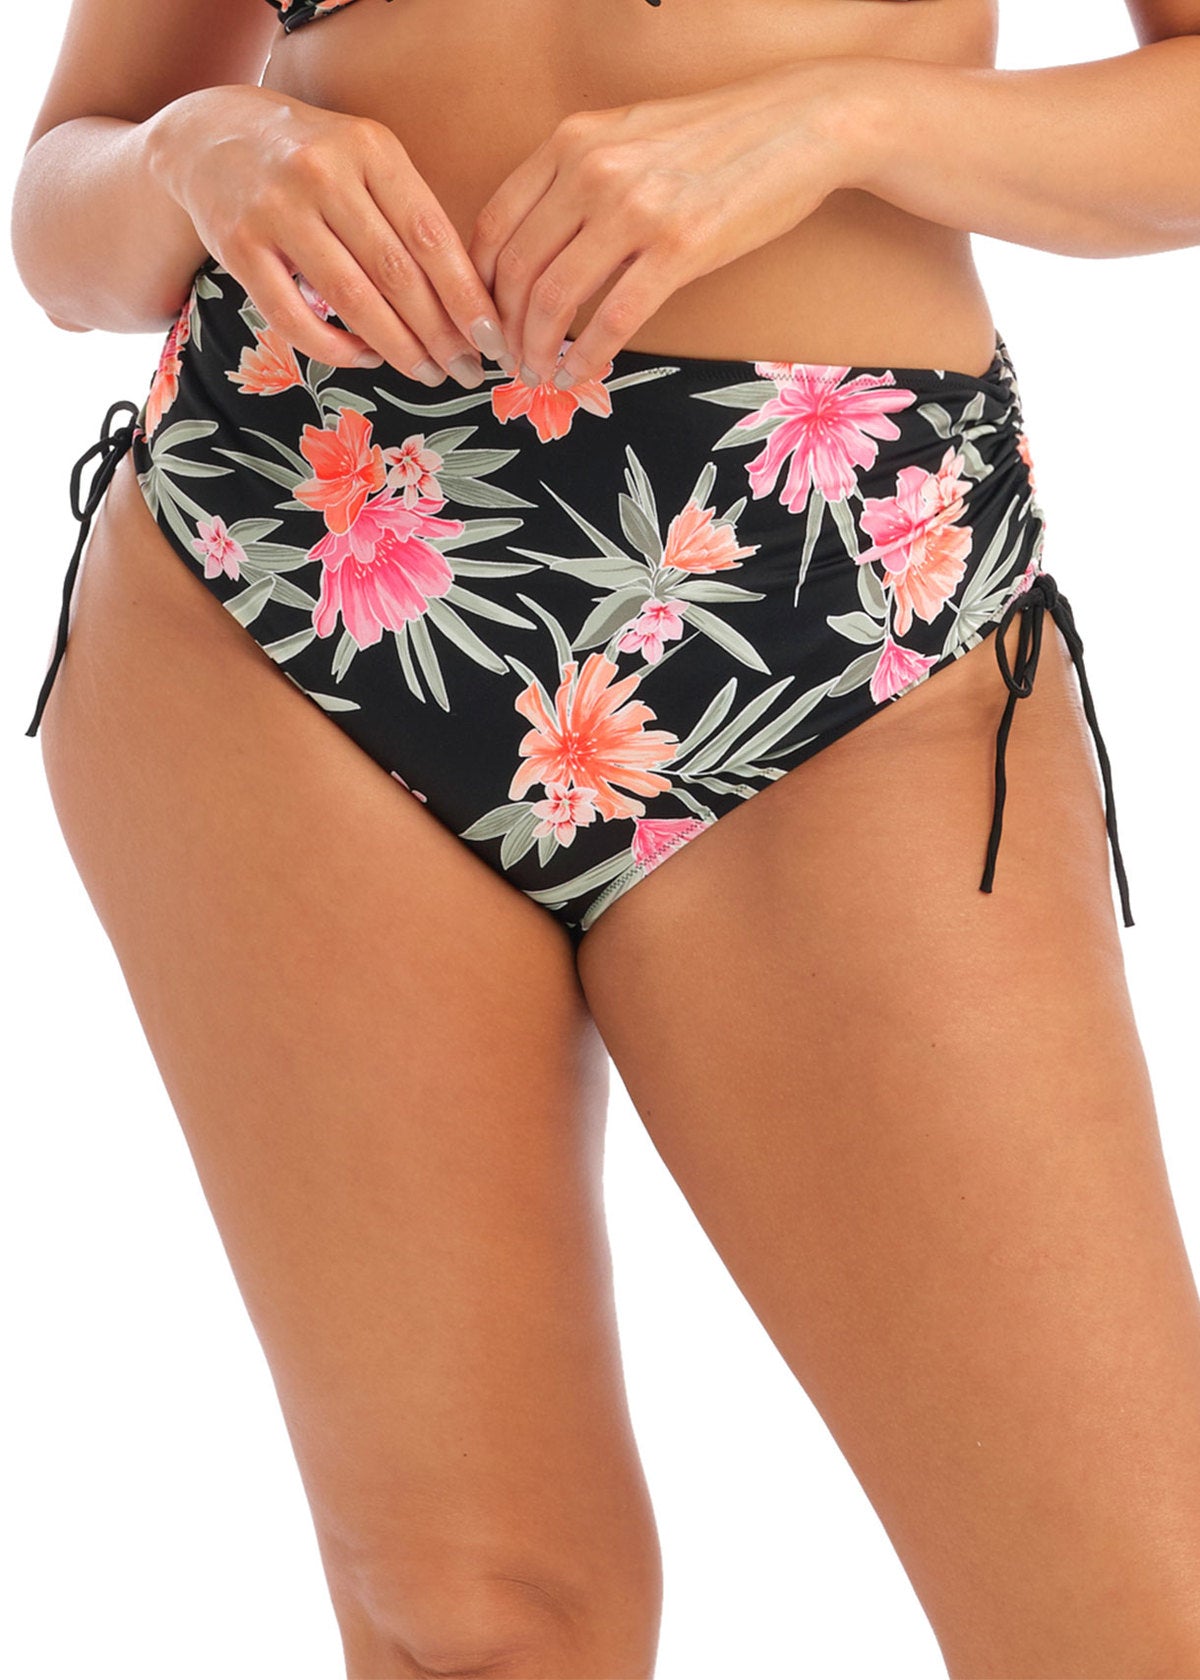 Dark Tropics Adjustable Bikini Briefs - Black, worn by model, front view